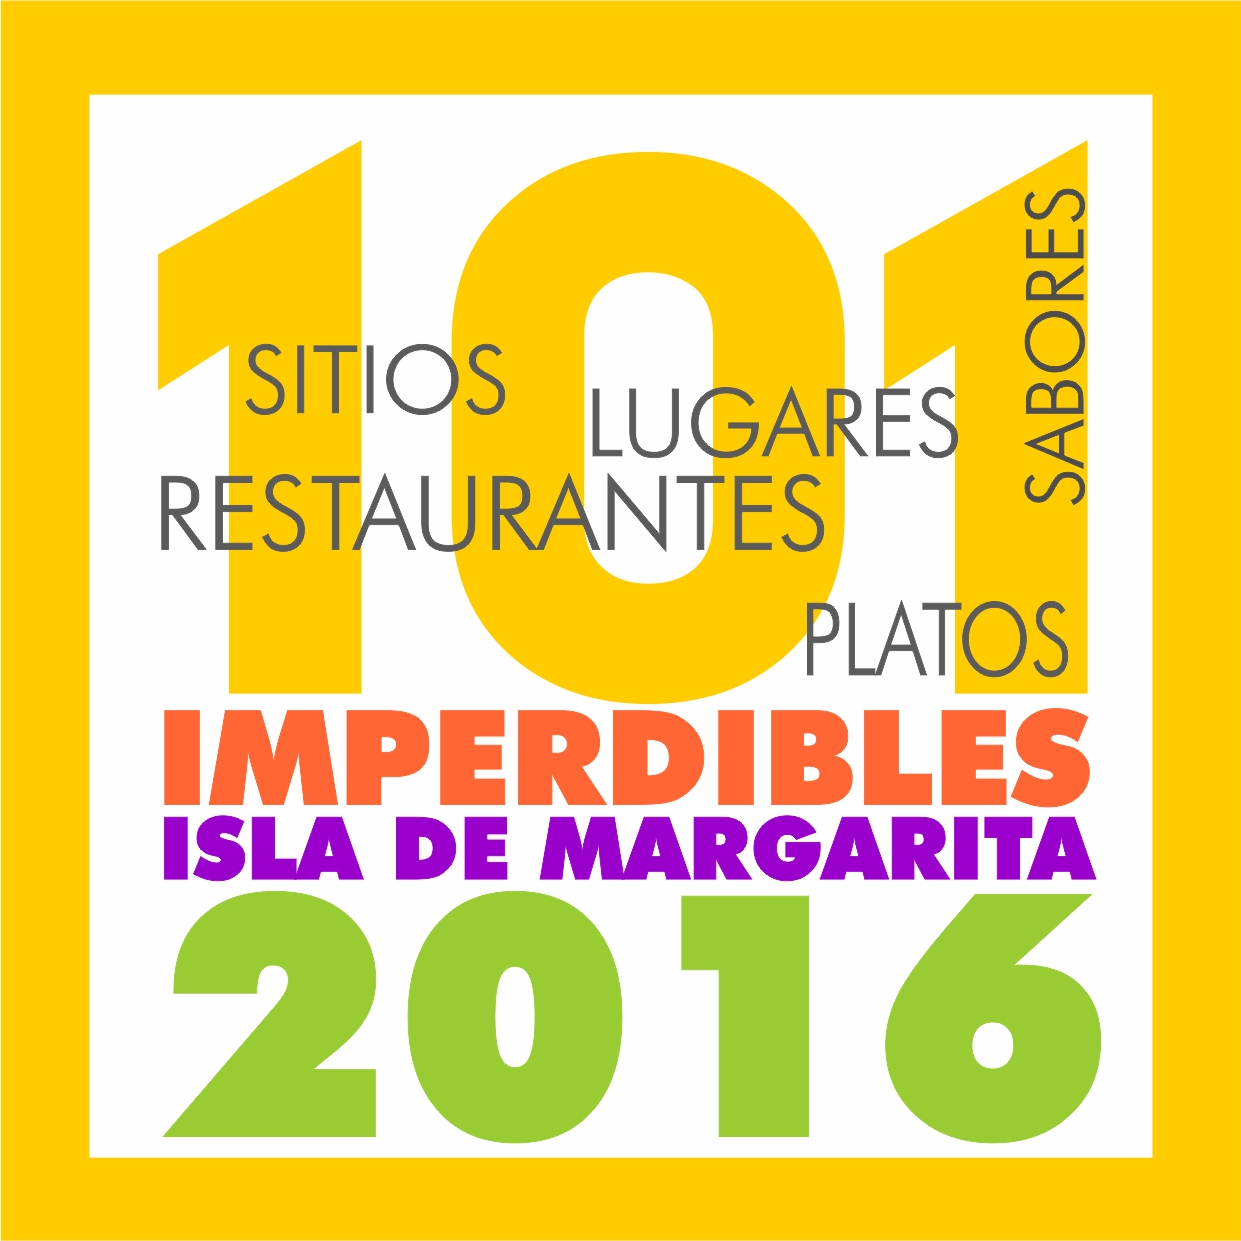 101 IMPERDIBLES DE MARGARITA 2016